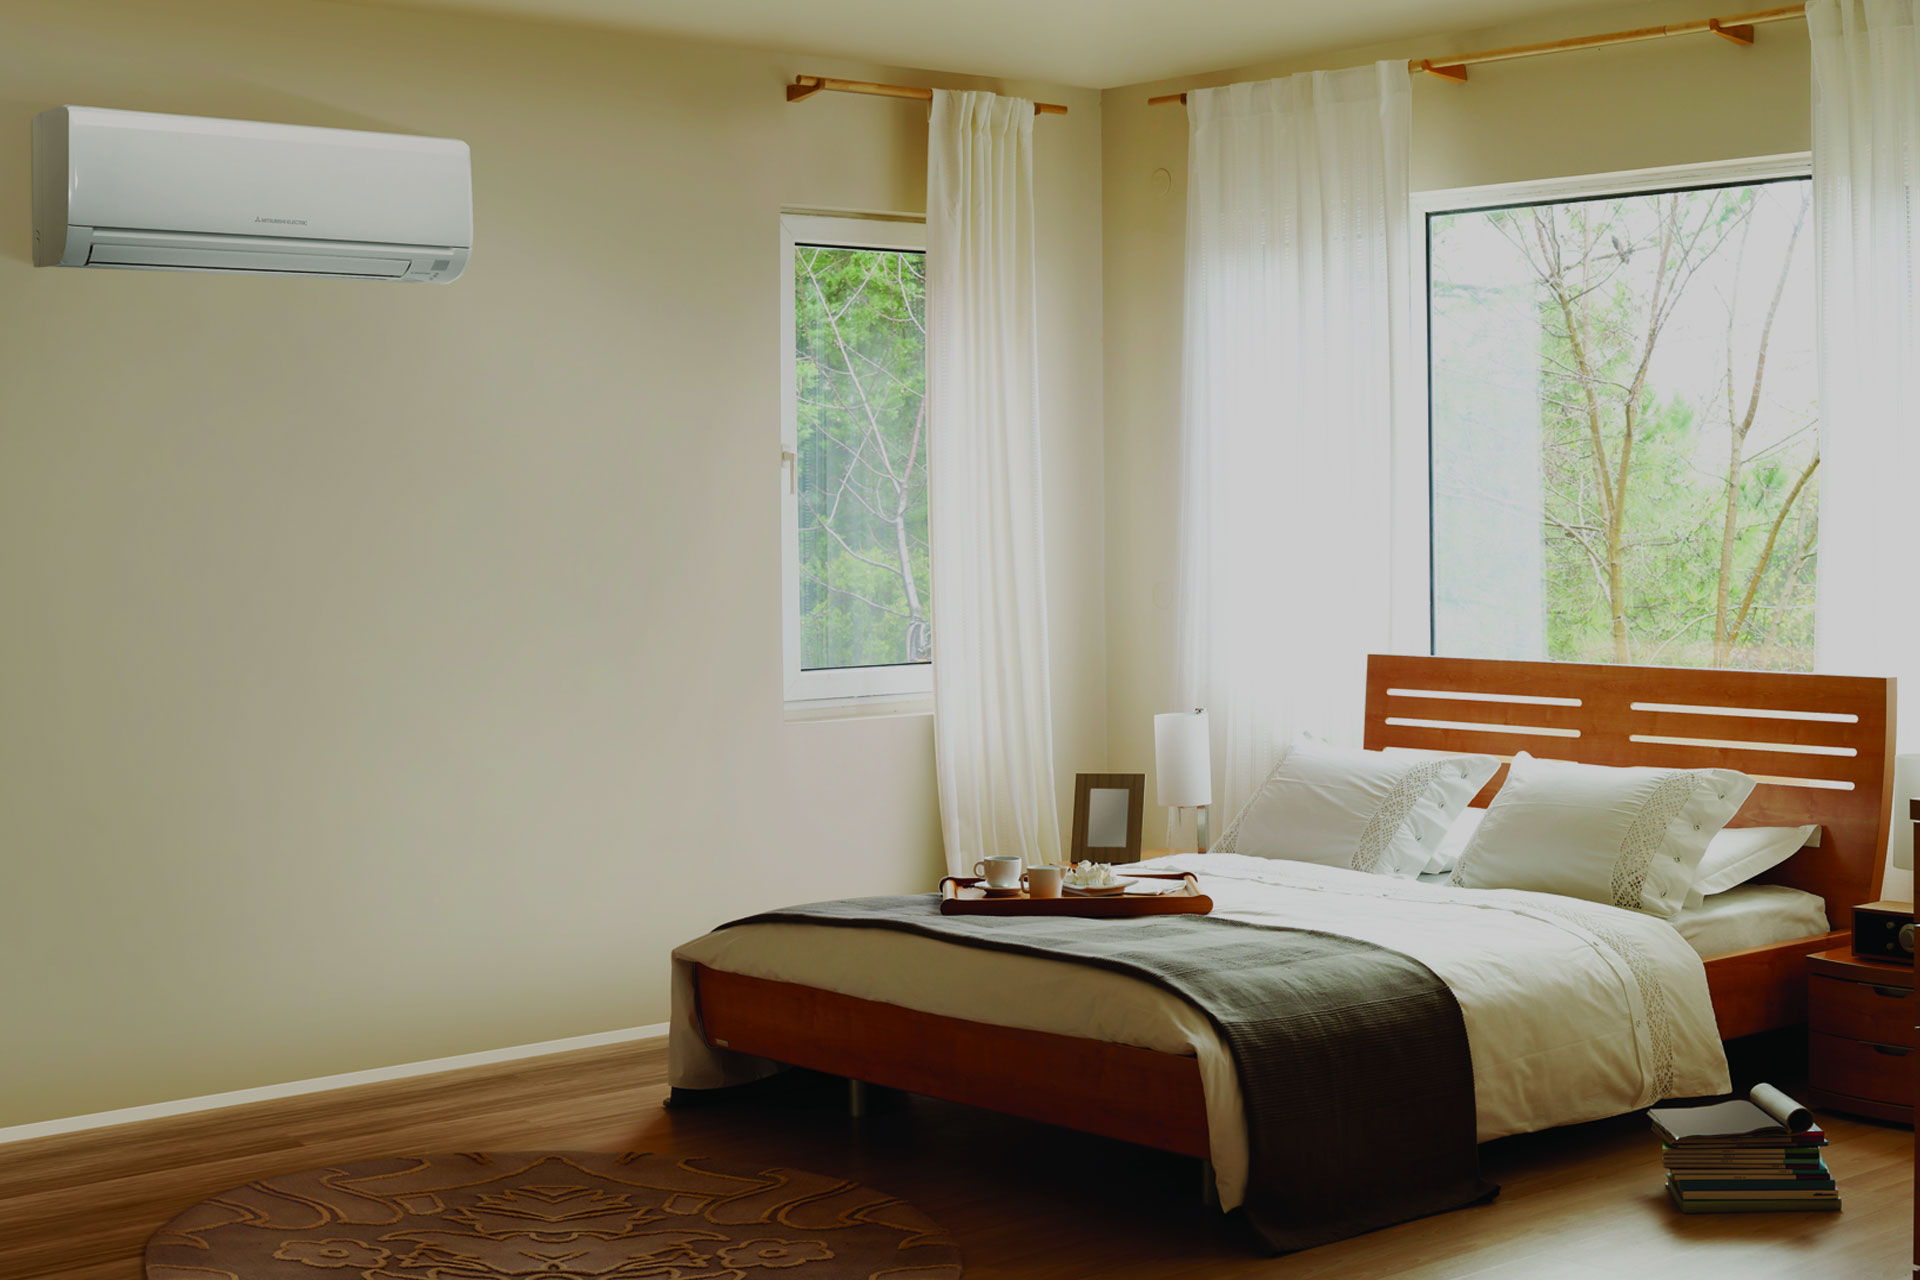 split system air conditioning installation melbourne